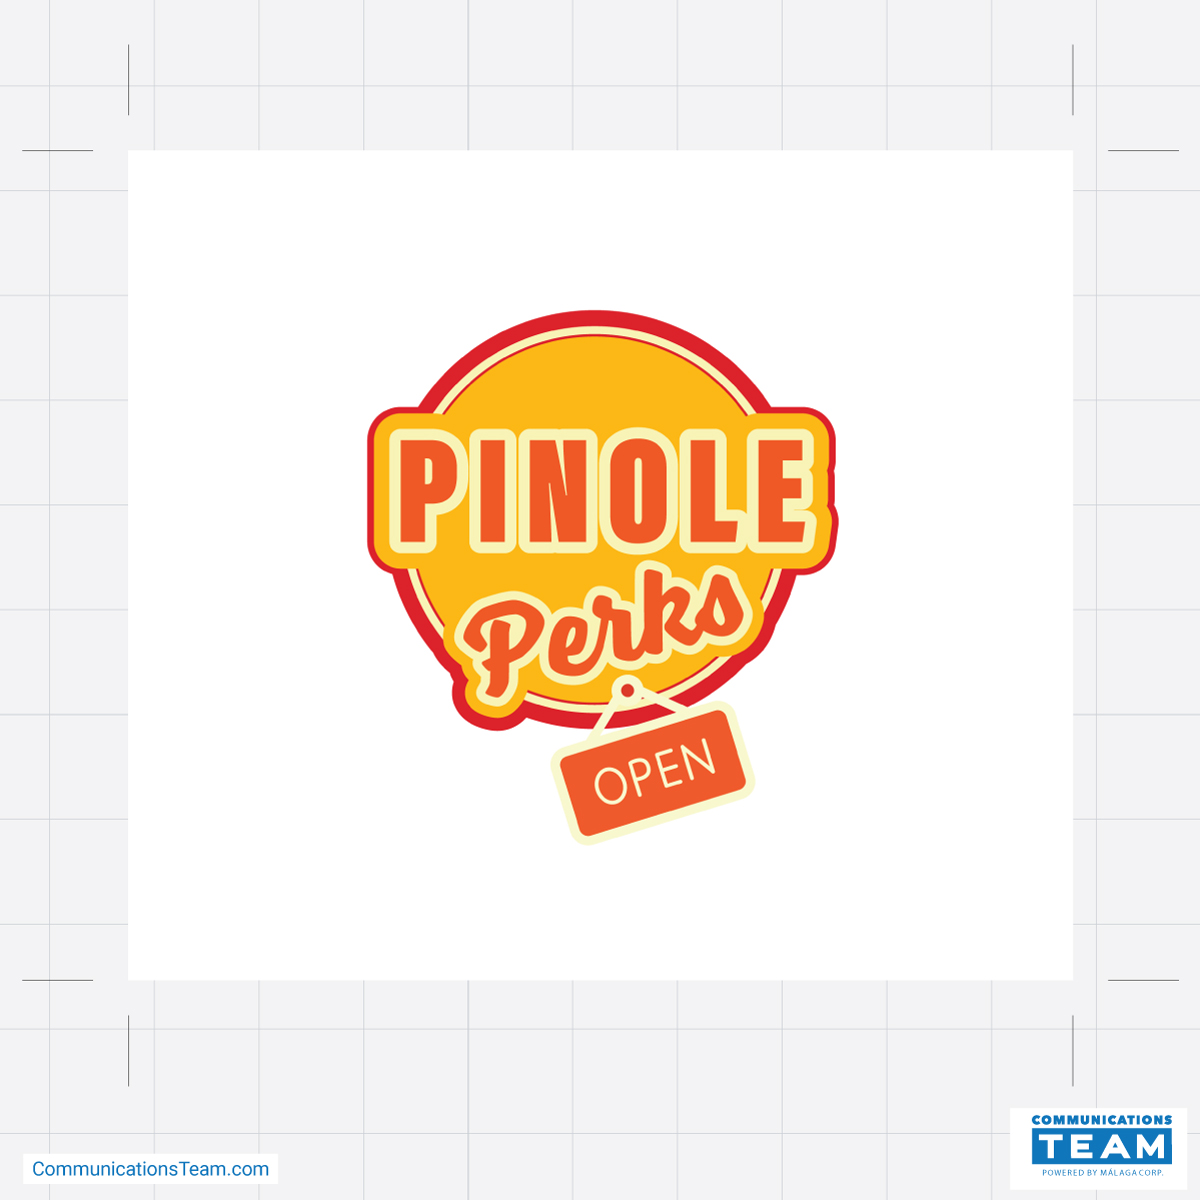 Communications-Team-Portfolio-Pinole-Perks-Logo